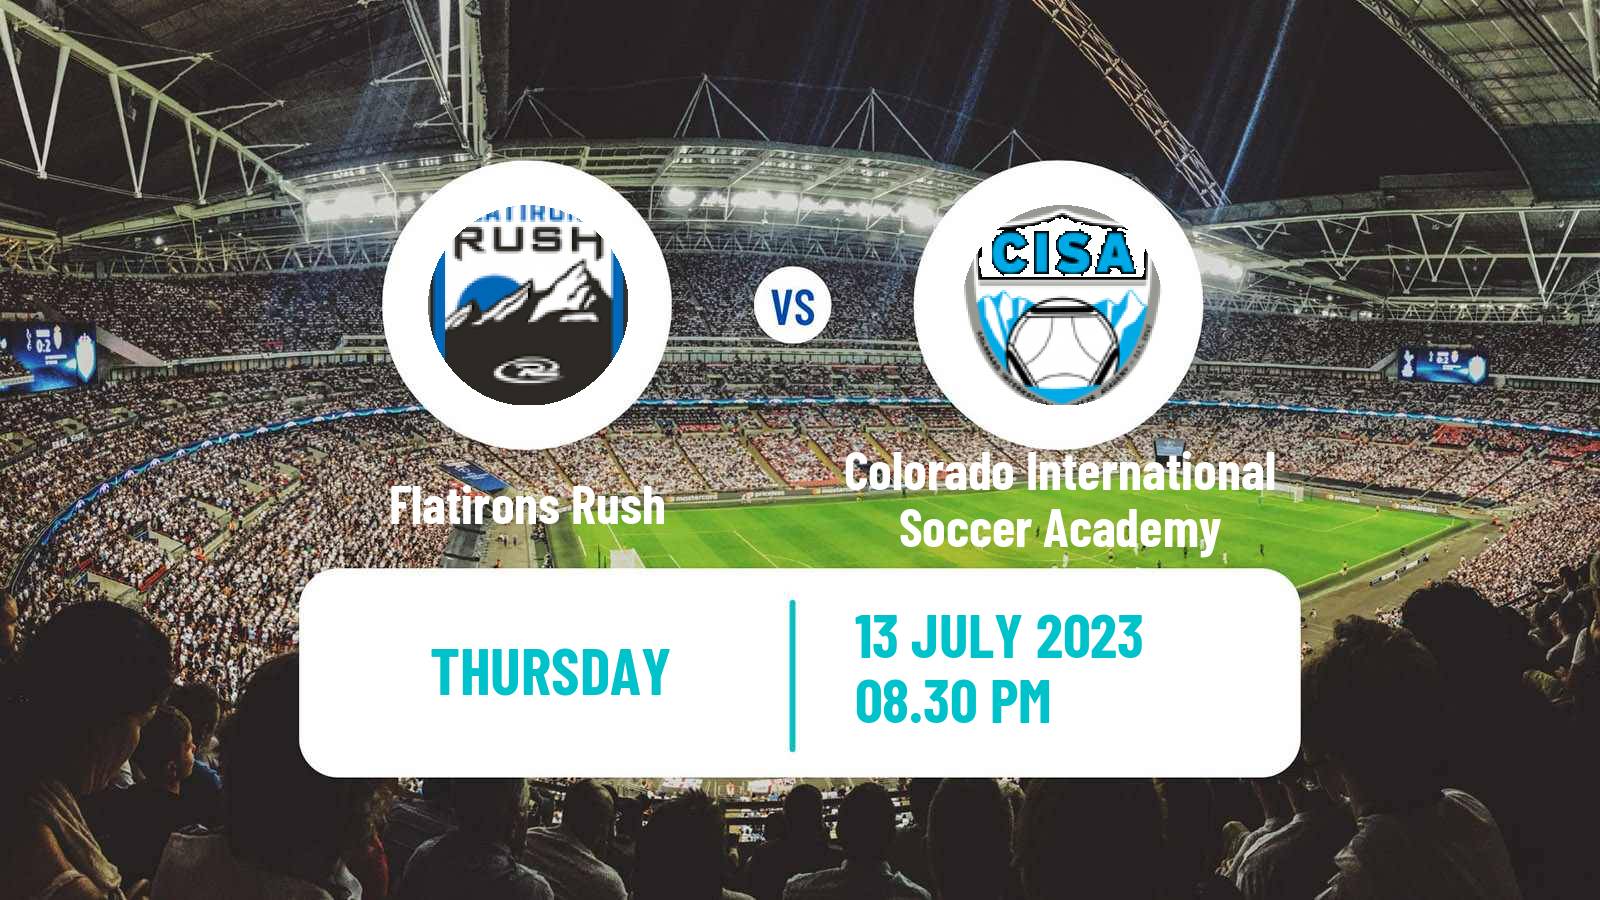 Soccer USL League Two Flatirons Rush - Colorado International Soccer Academy